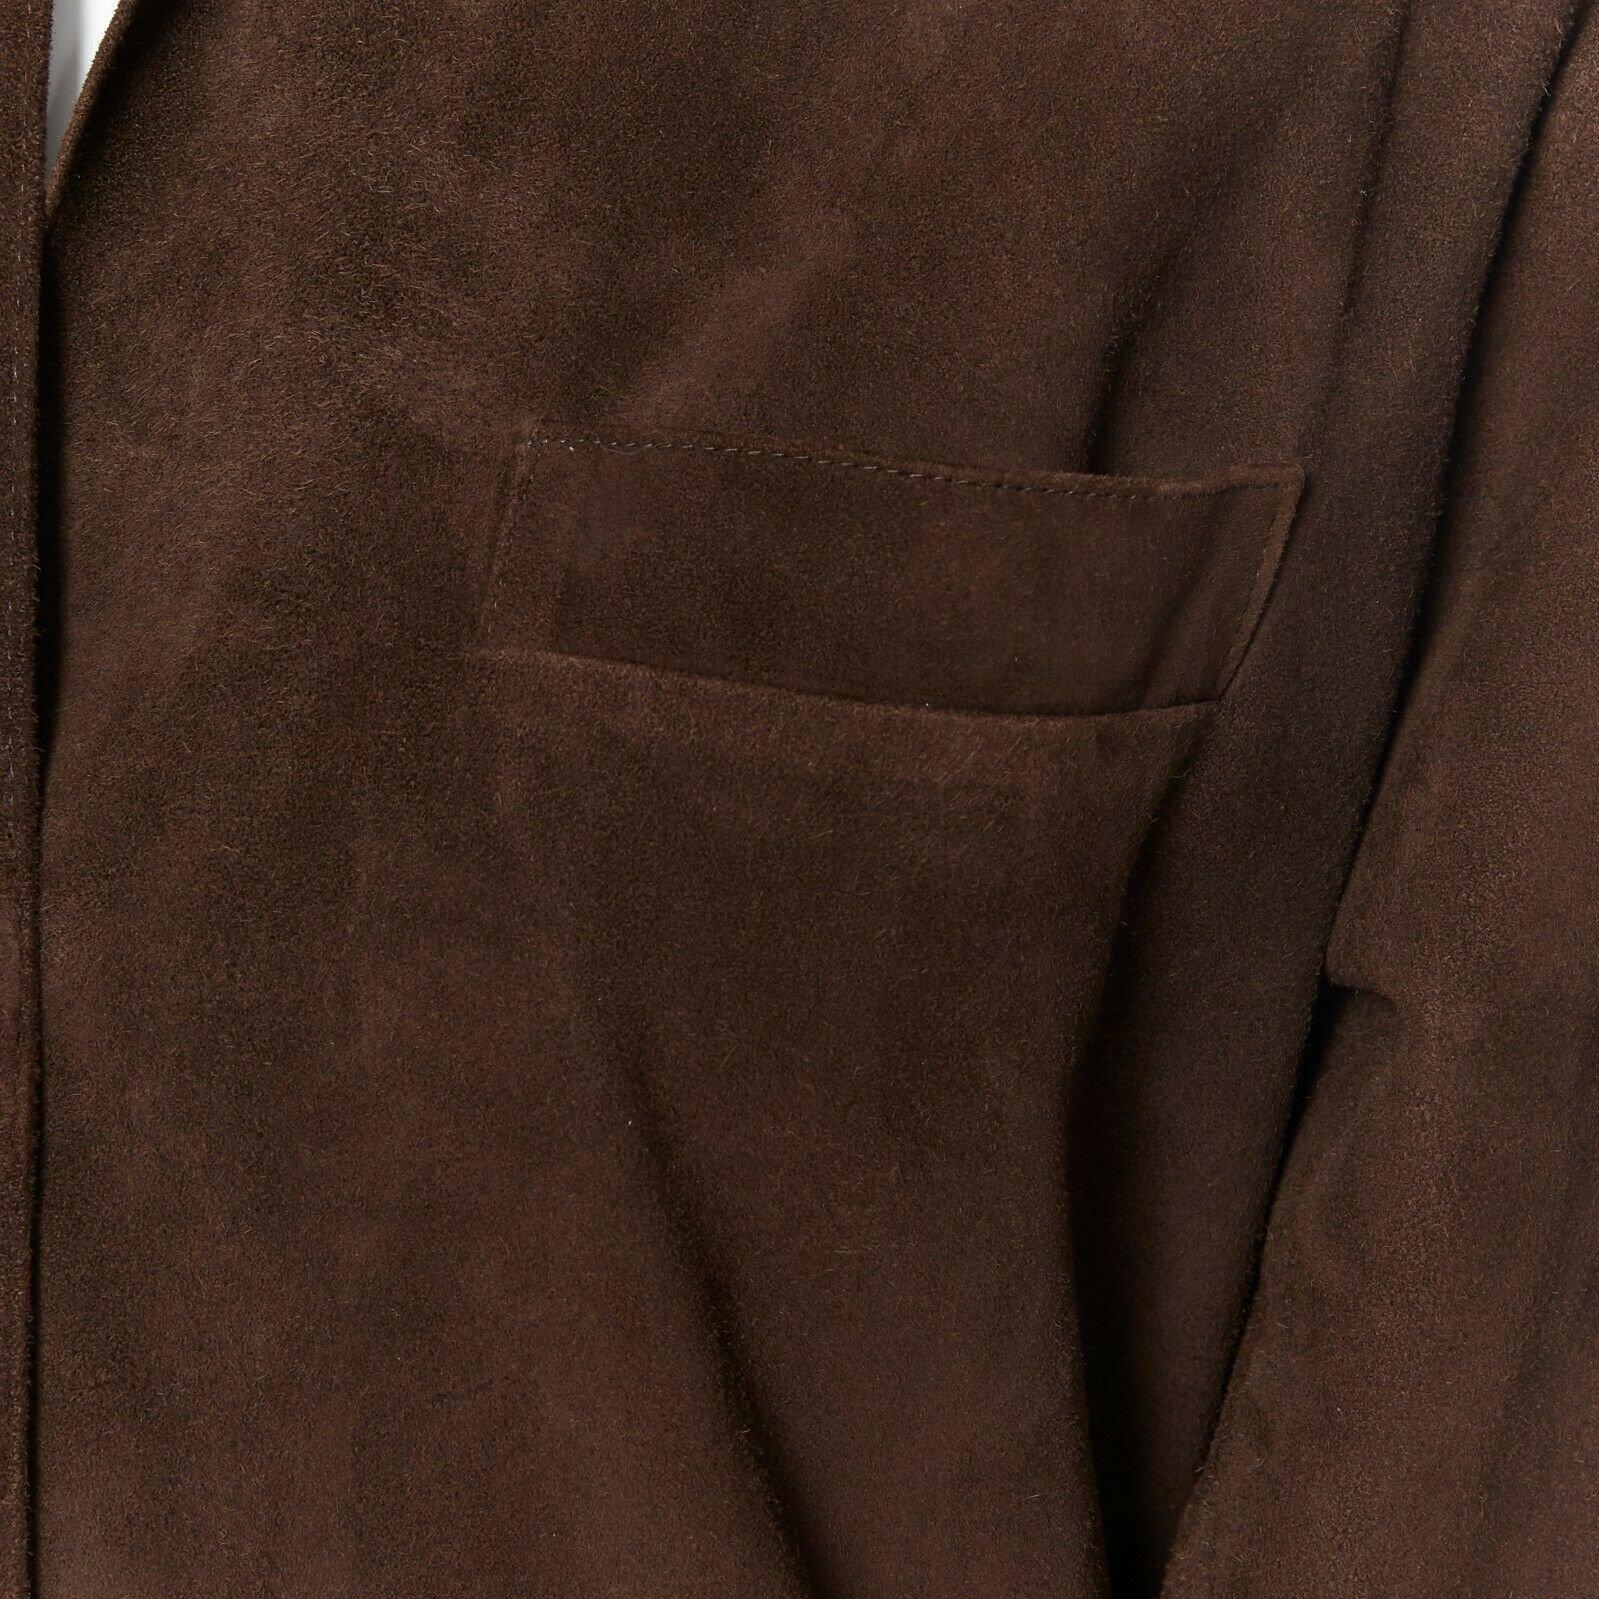 HERMES MARTIN MARGIELA vintage brown suede peak spread collar long shirt FR38 4